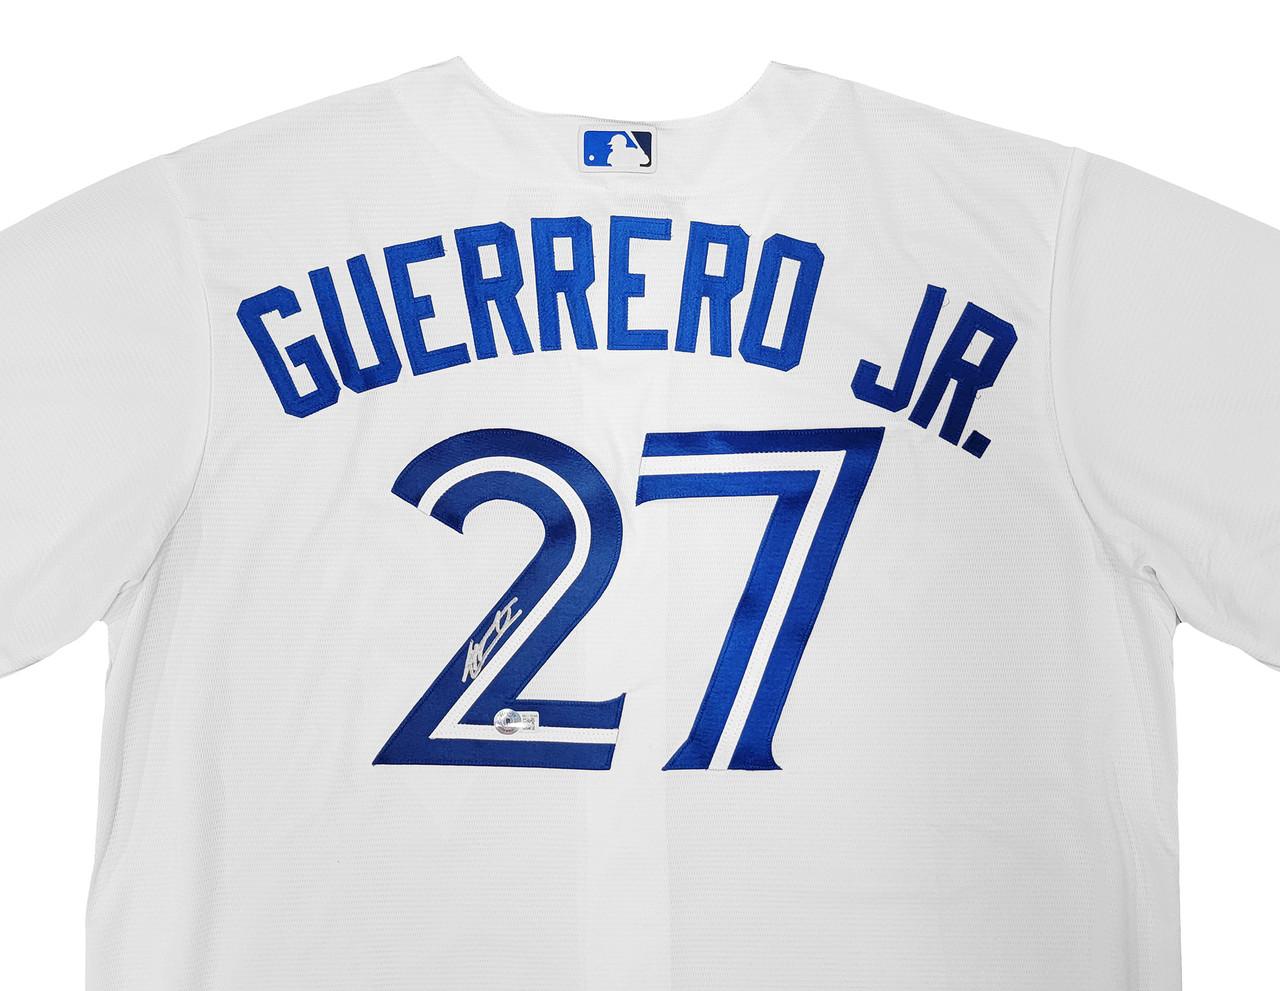 Vladimir Guerrero Jr Signed Jersey - Toronto Blue Jays Replica Blue 